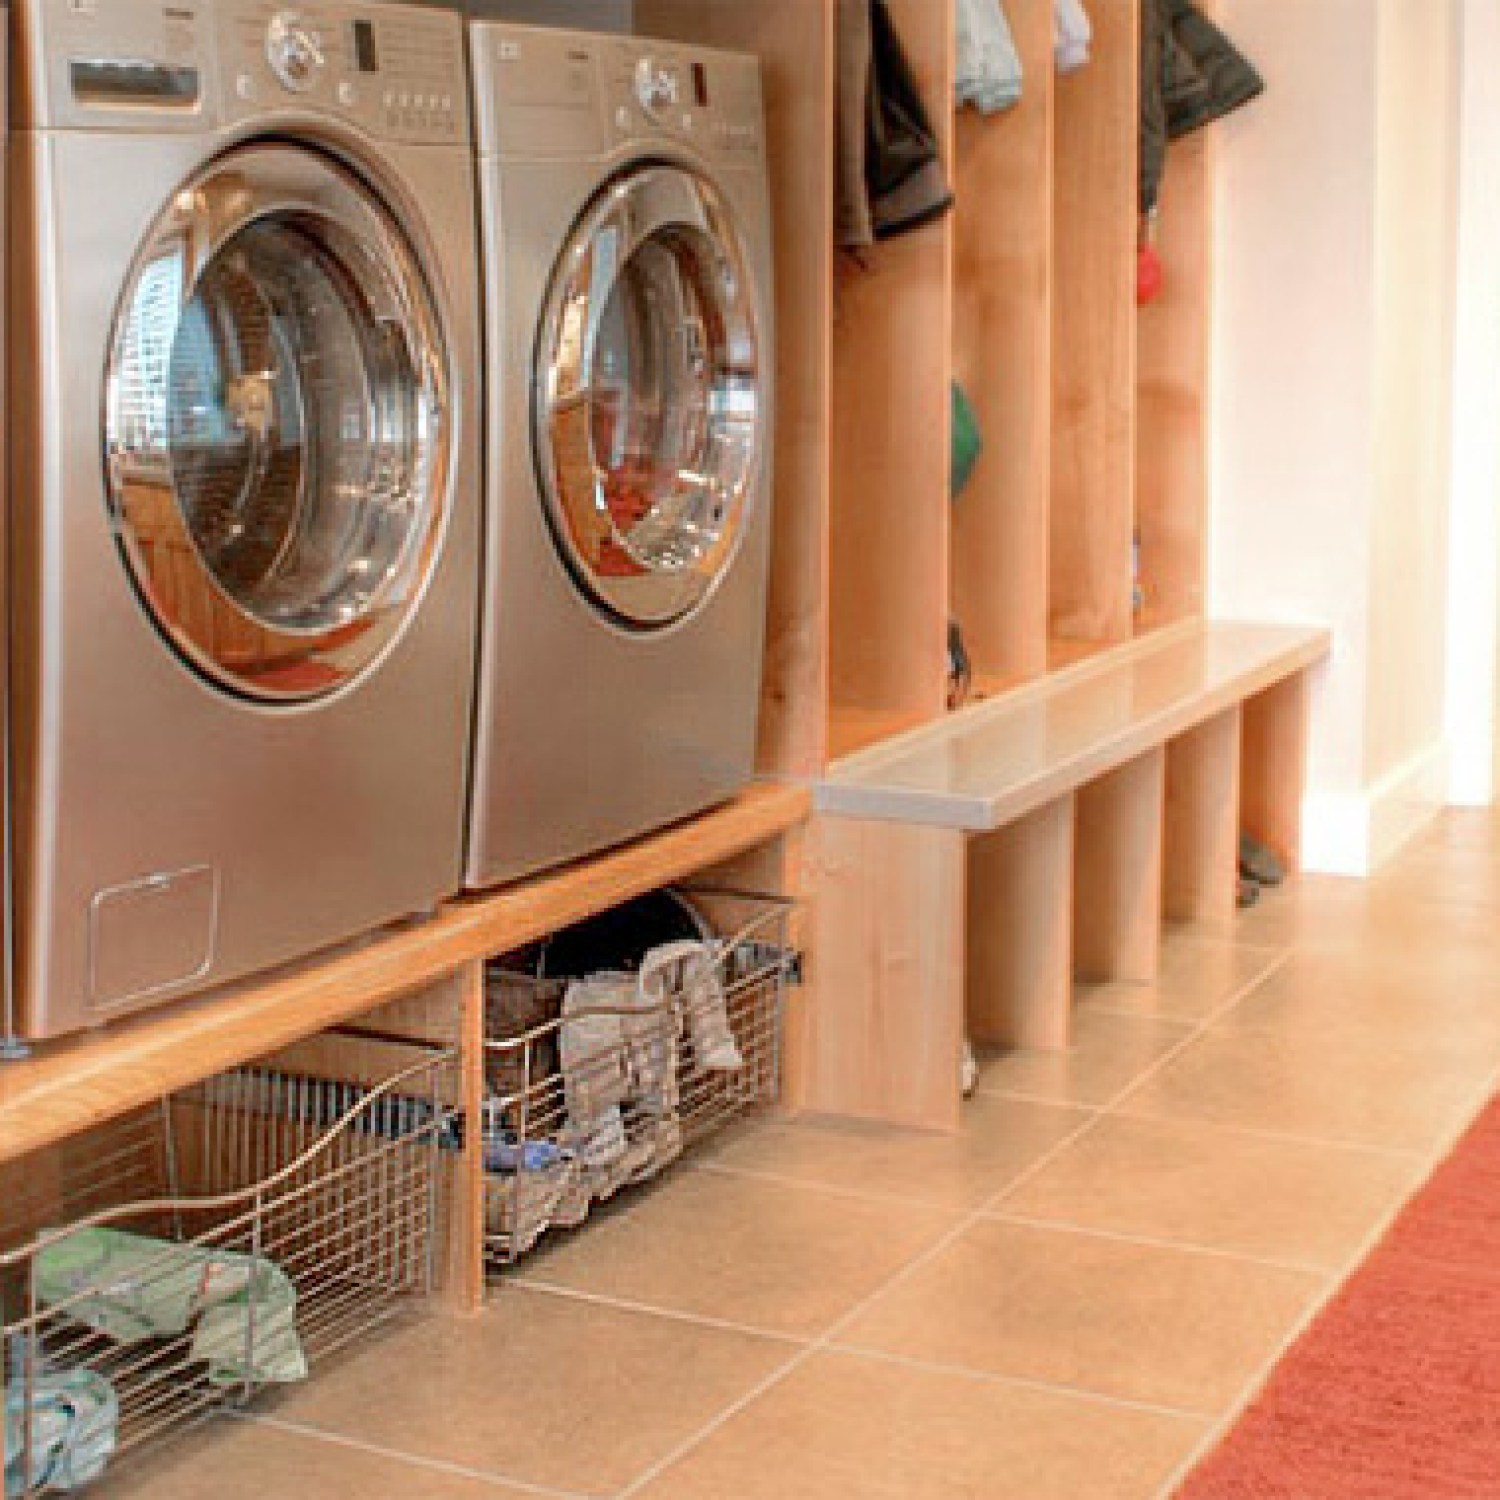 Organized Laundry Room | Laundry Room Design